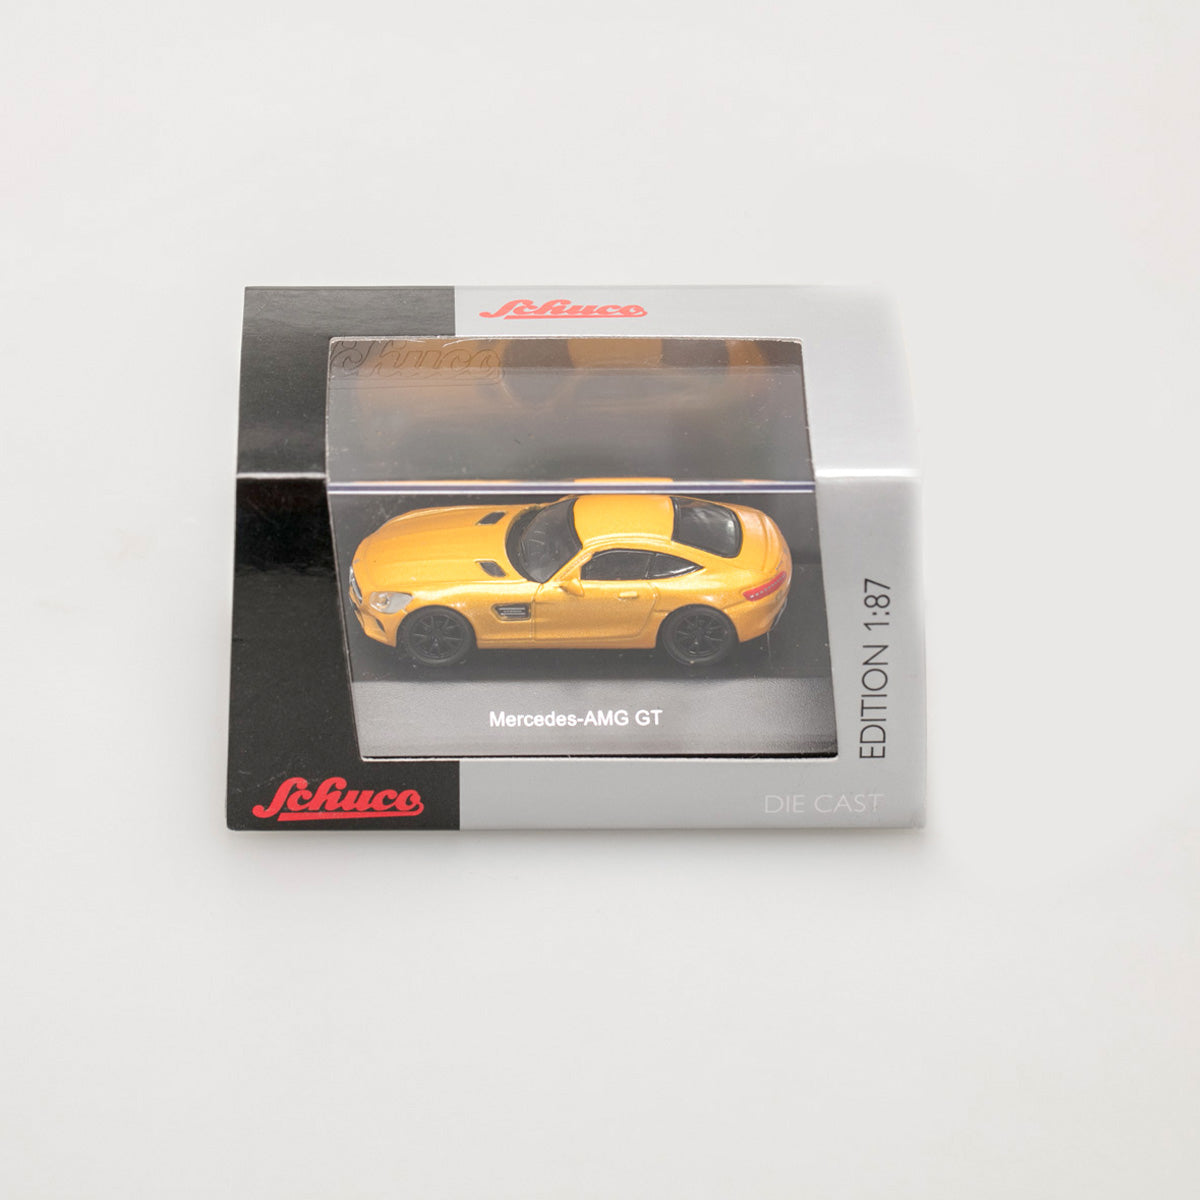 Schuco 1:87 Mercedes AMG GT yellow 452634200